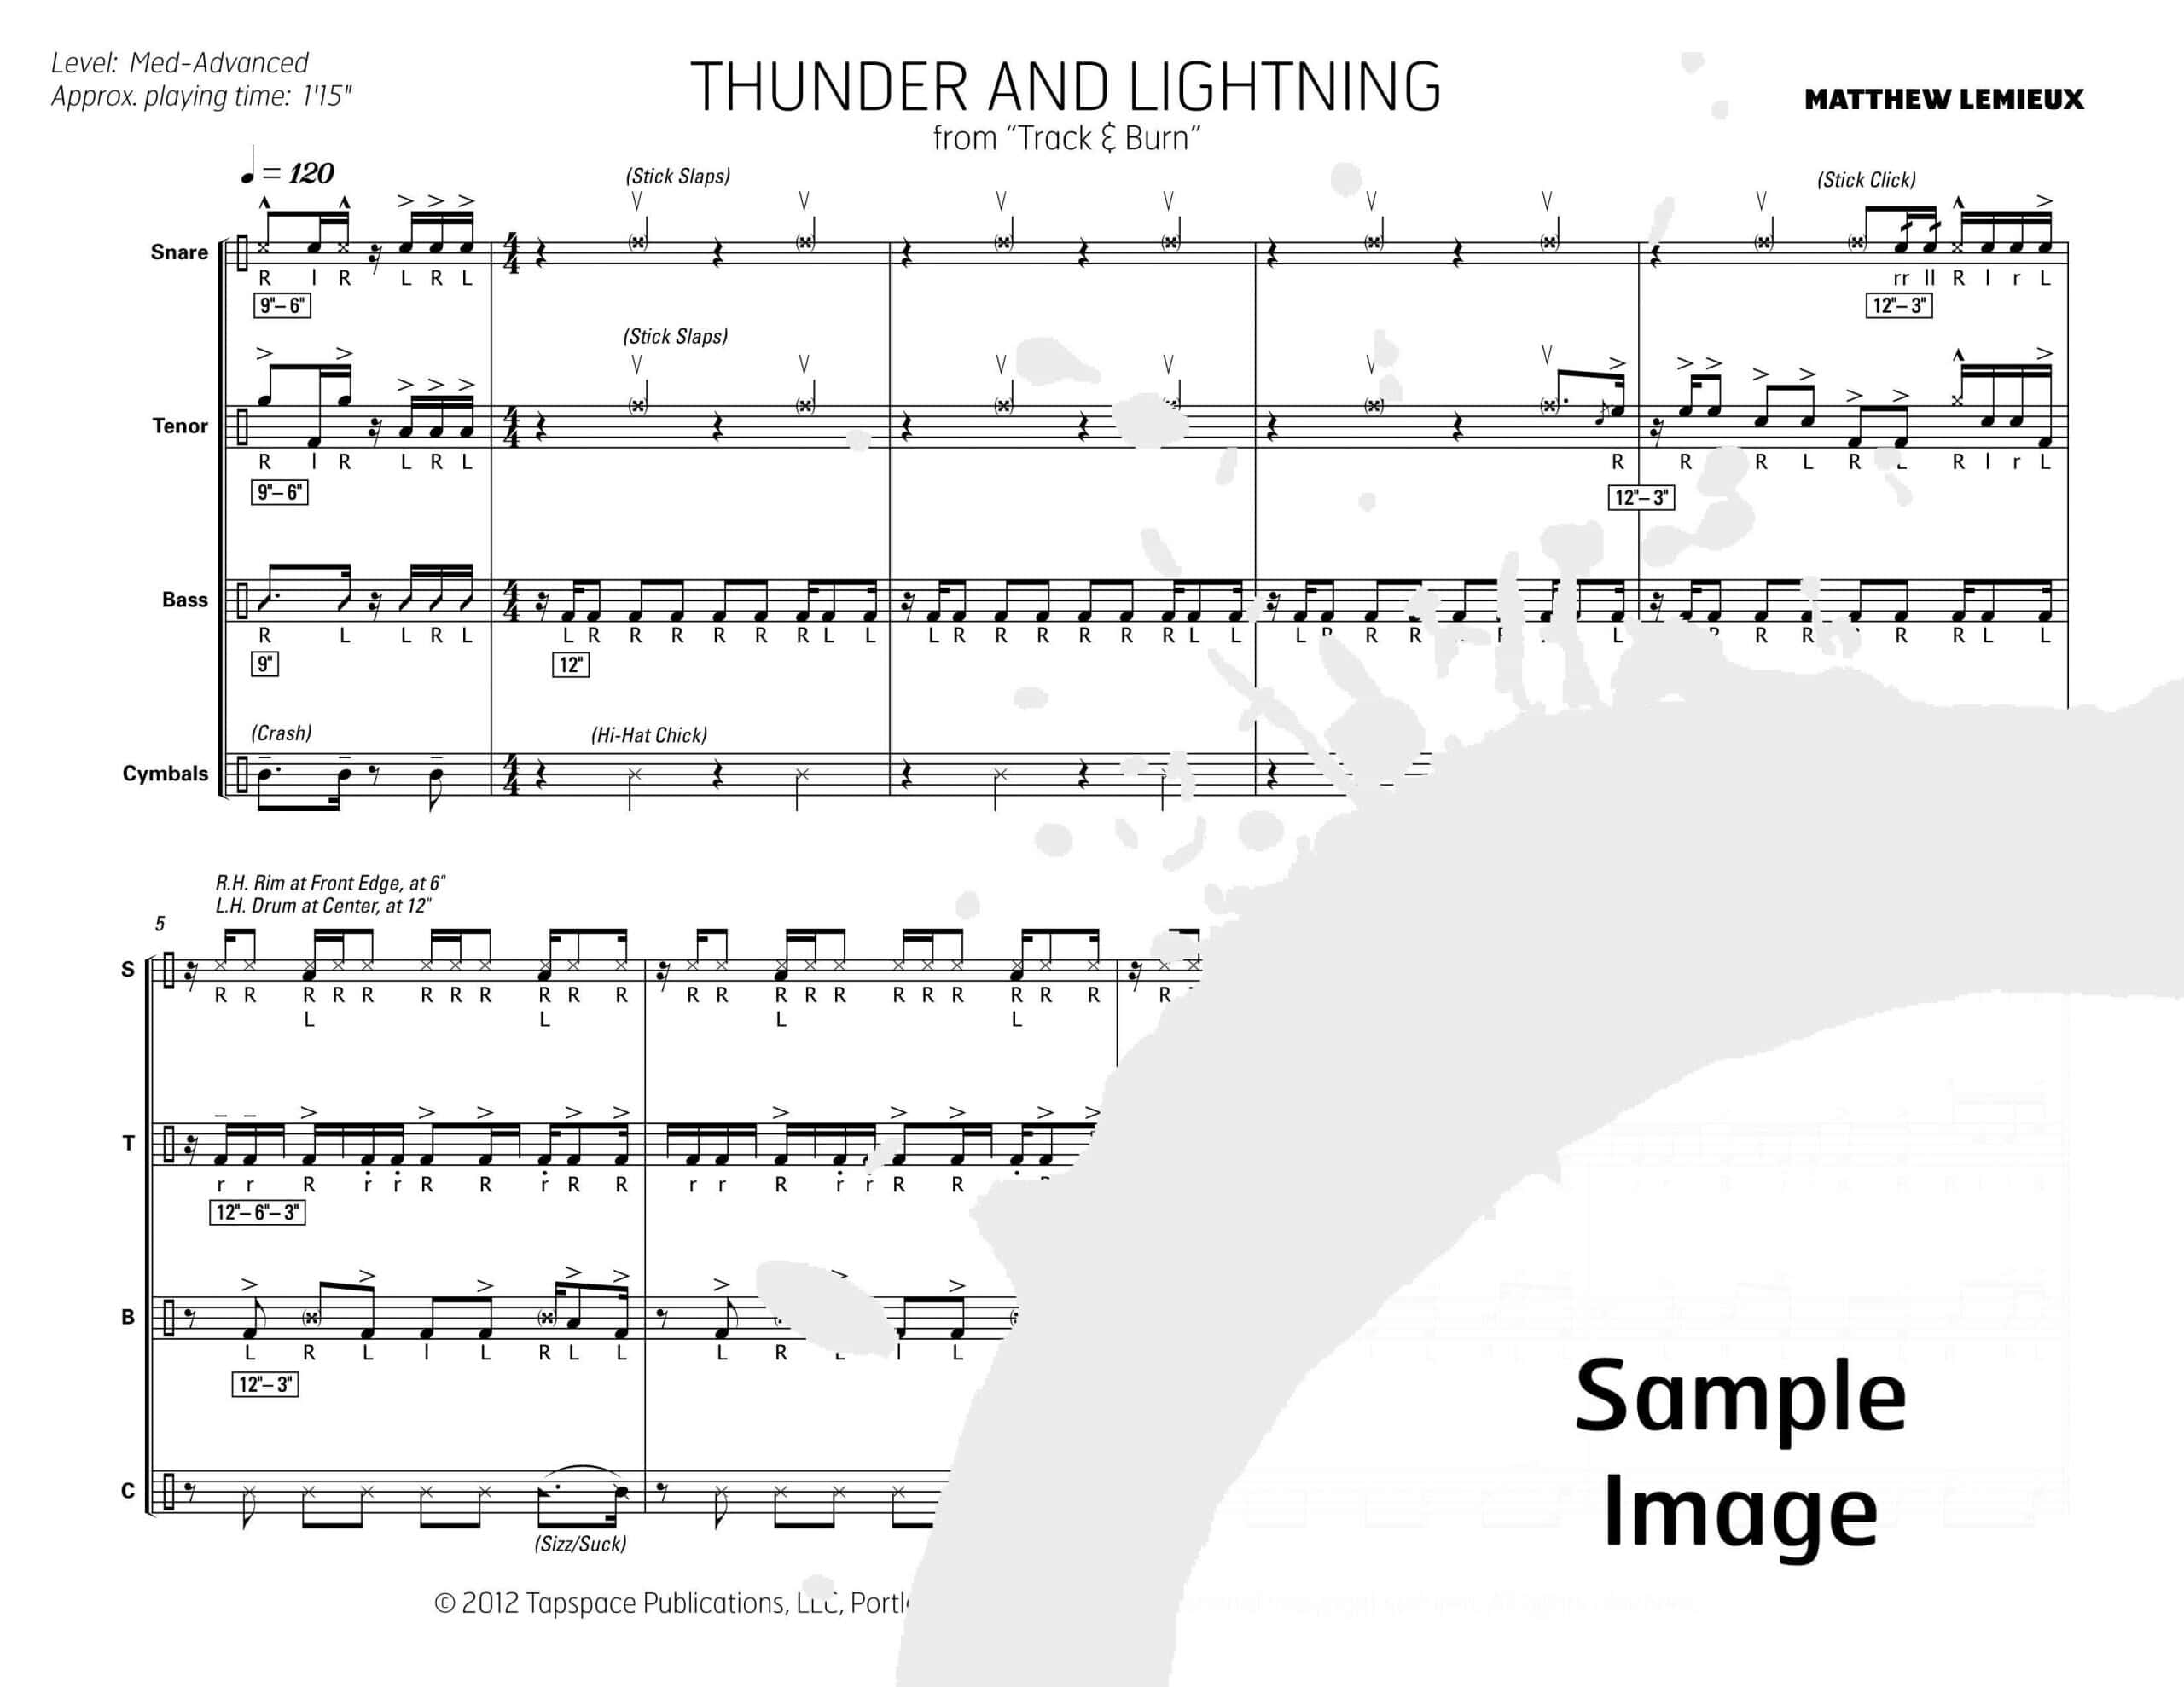 Thunder and Lightning by Matthew Lemieux